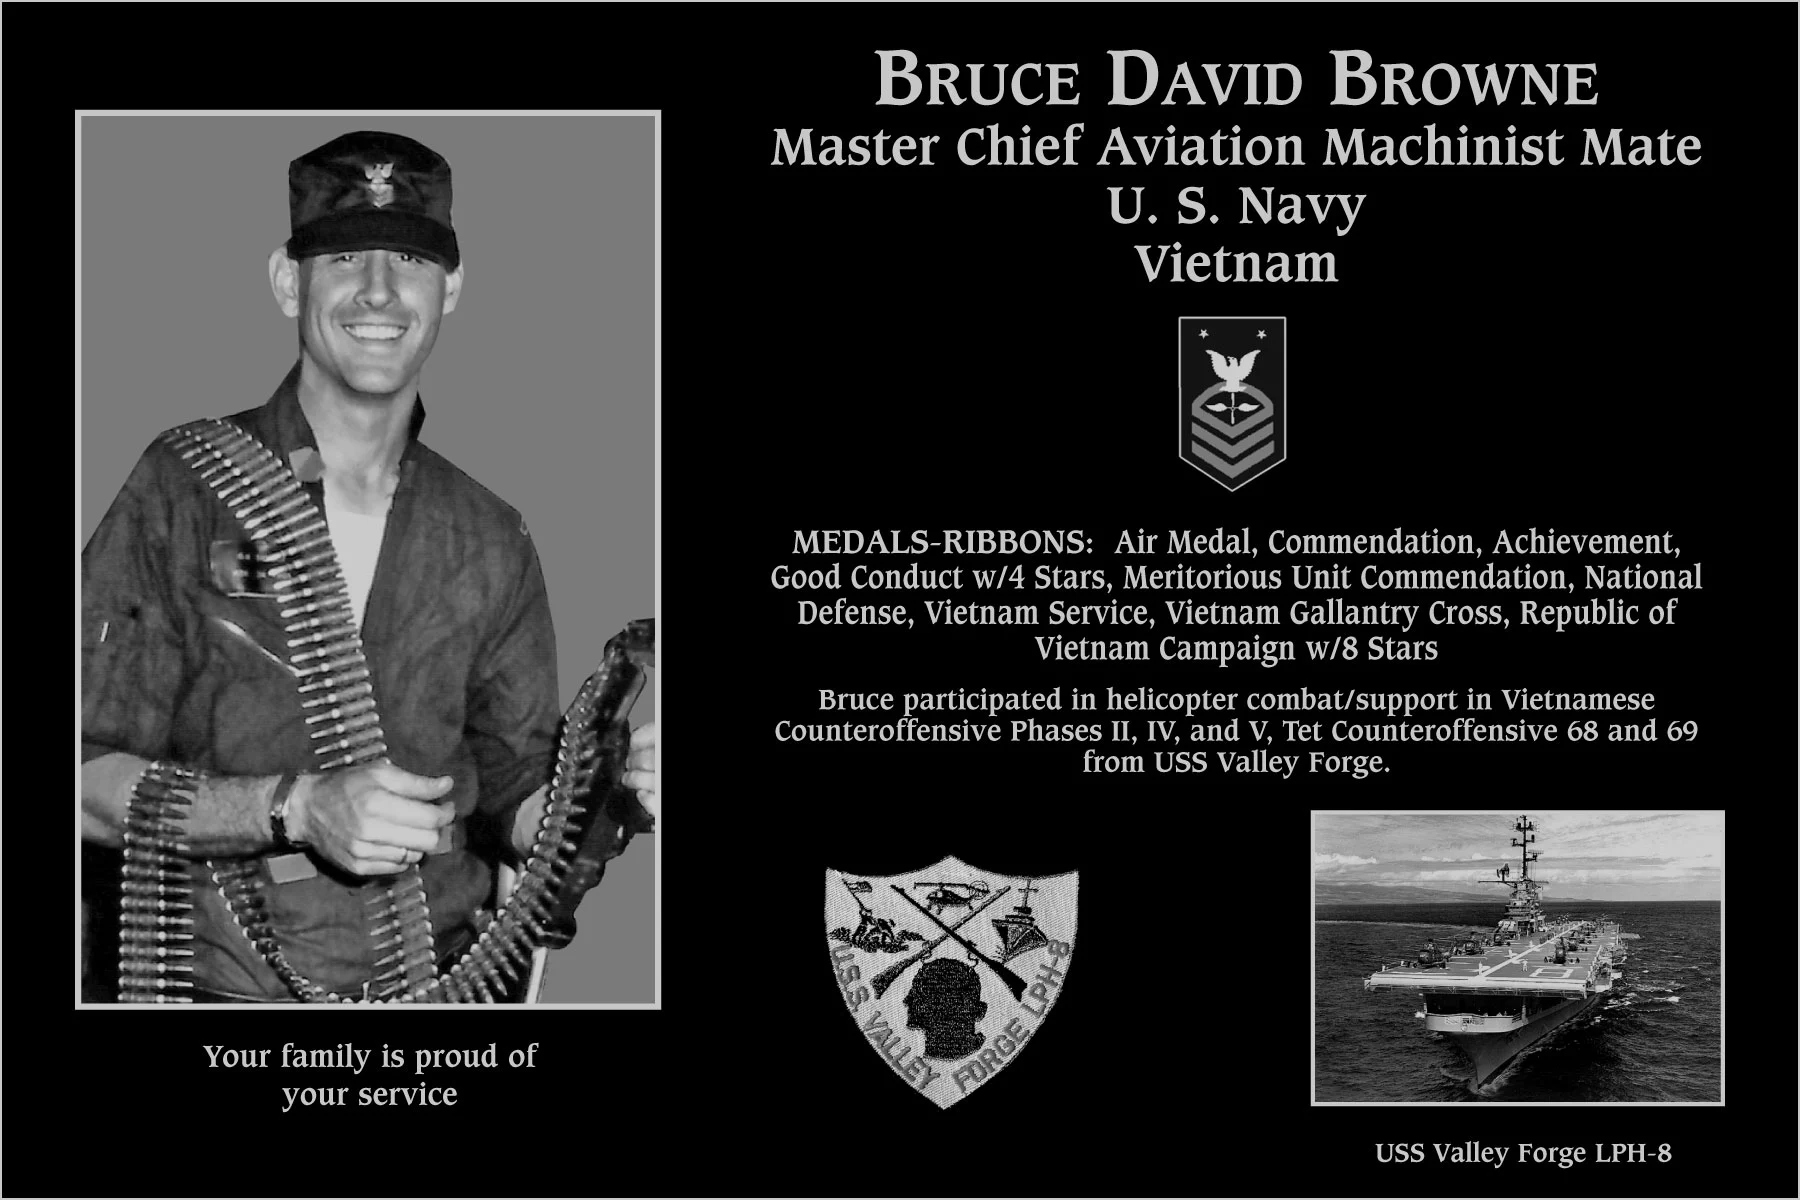 Bruce David Browne